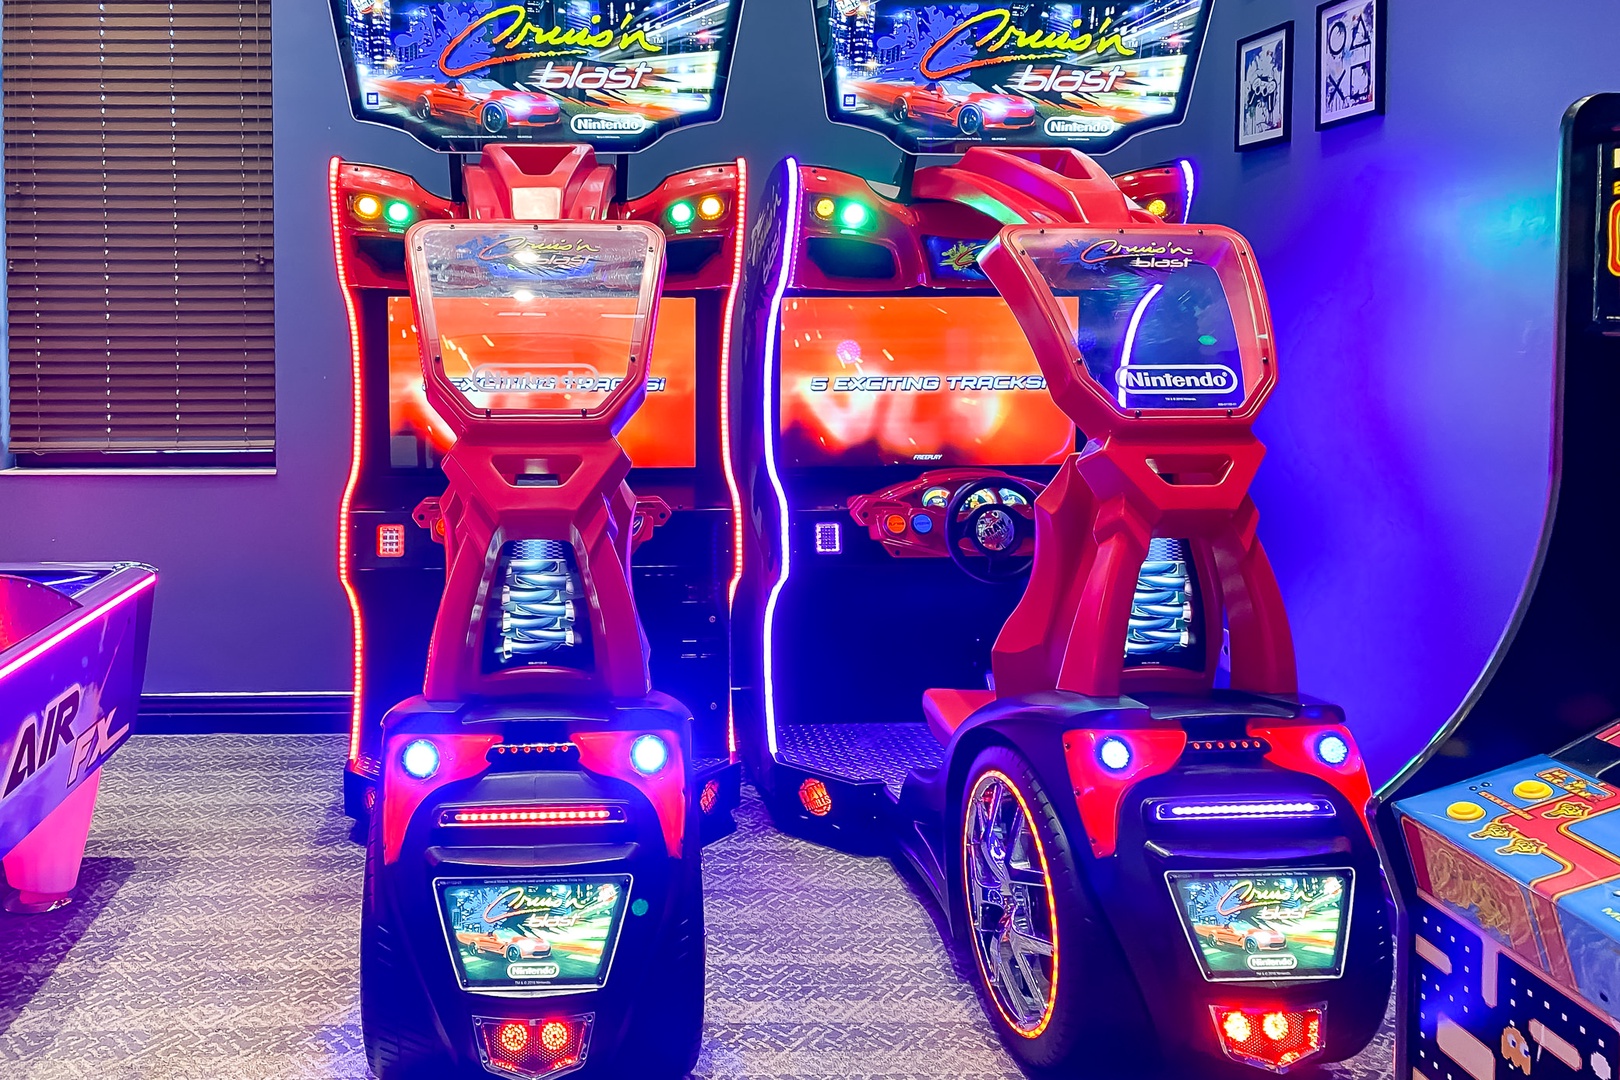 Resort arcade